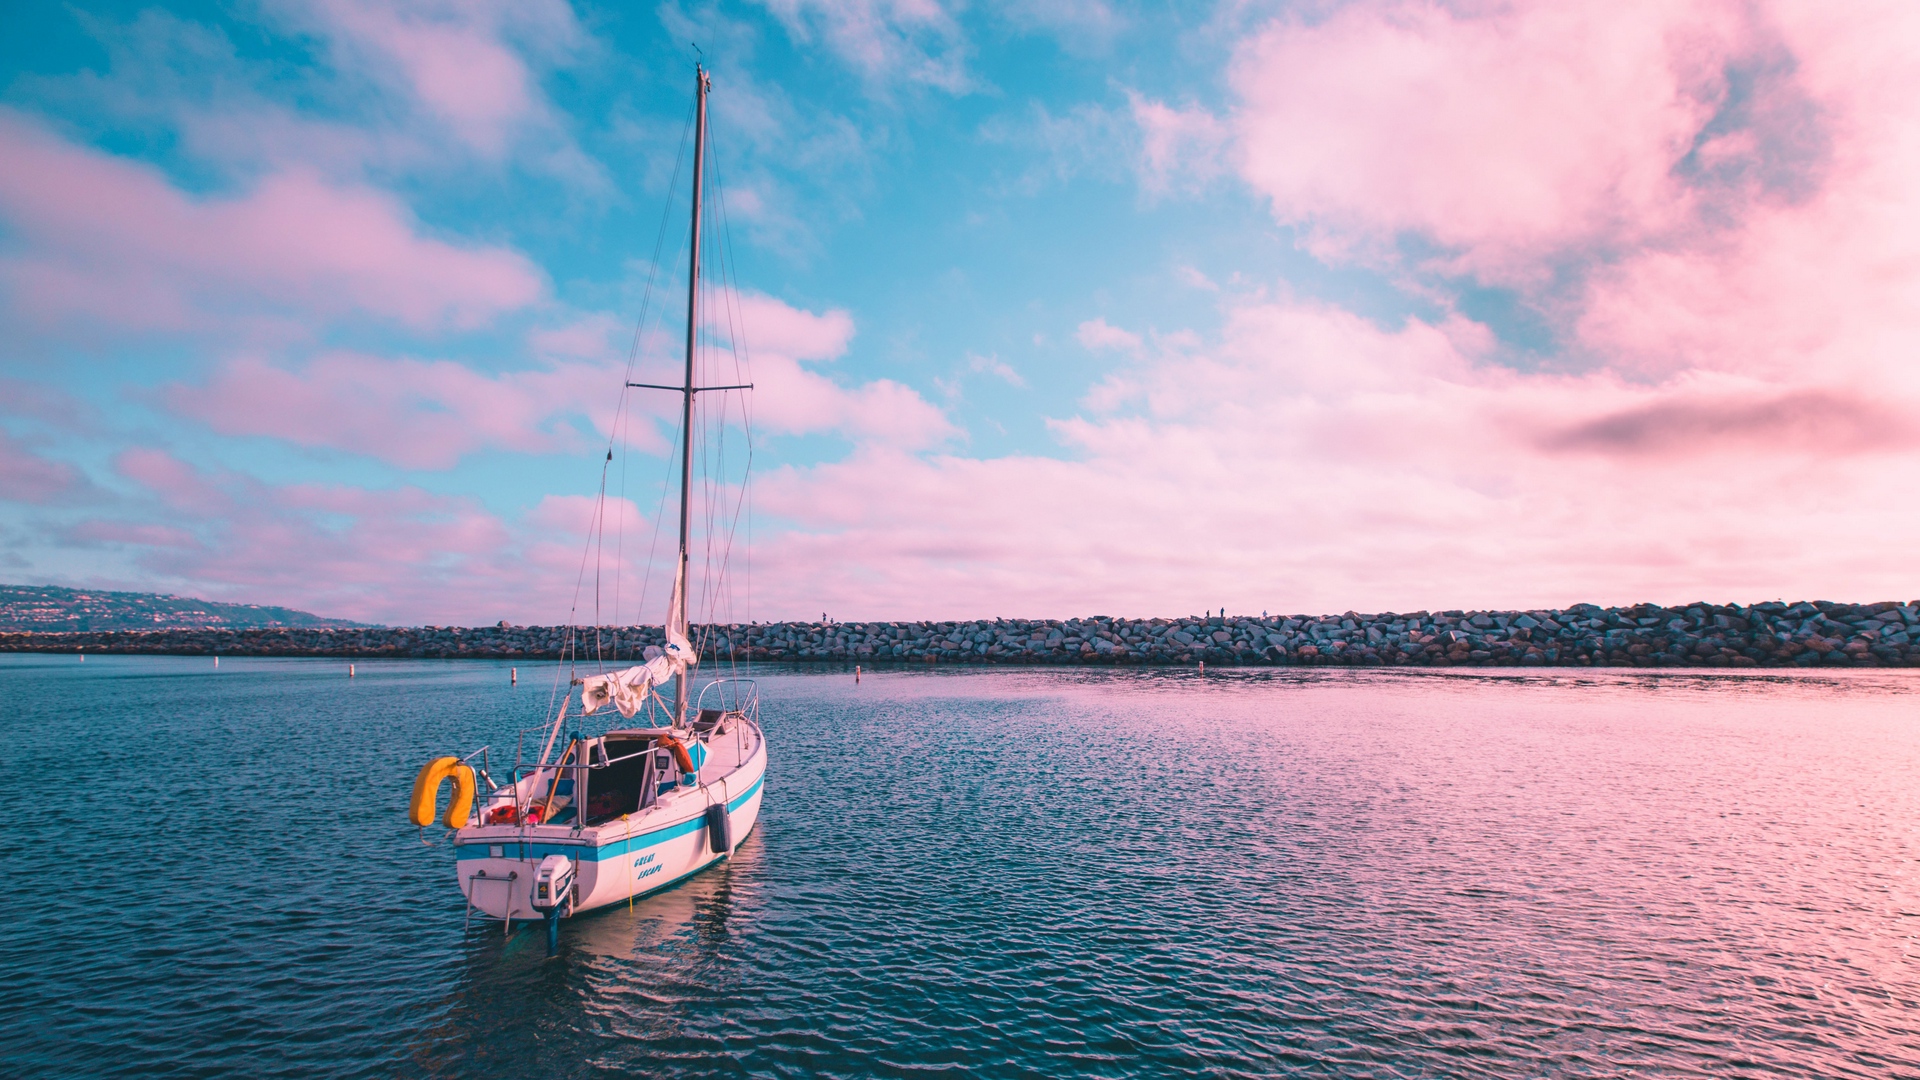 General 1920x1080 boat sunset pink sea California sky water sailboats